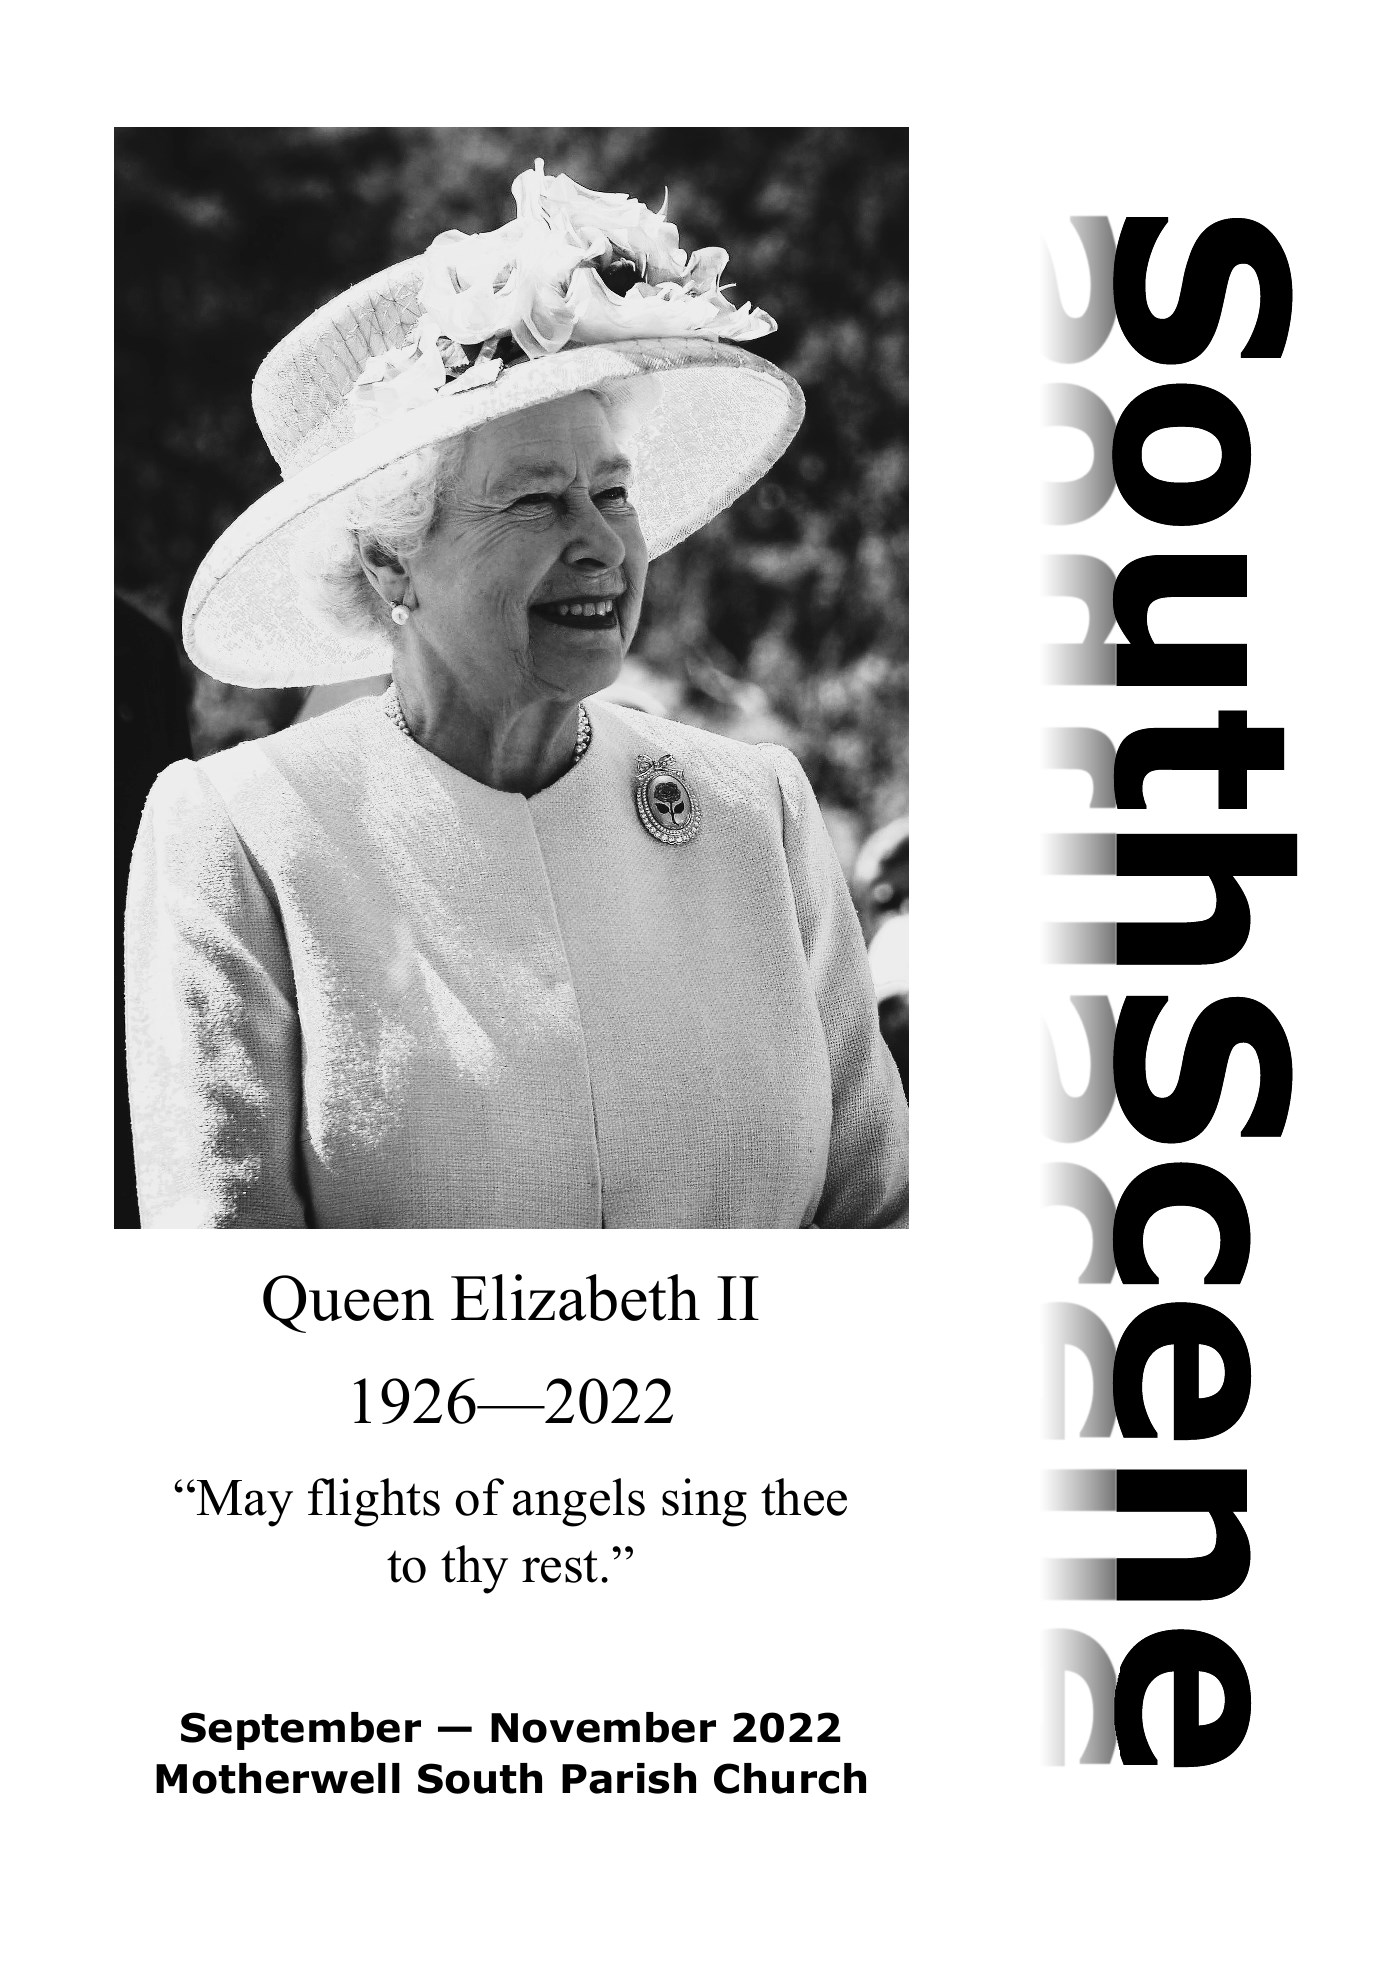 SouthScene: Queen Elizabeth II